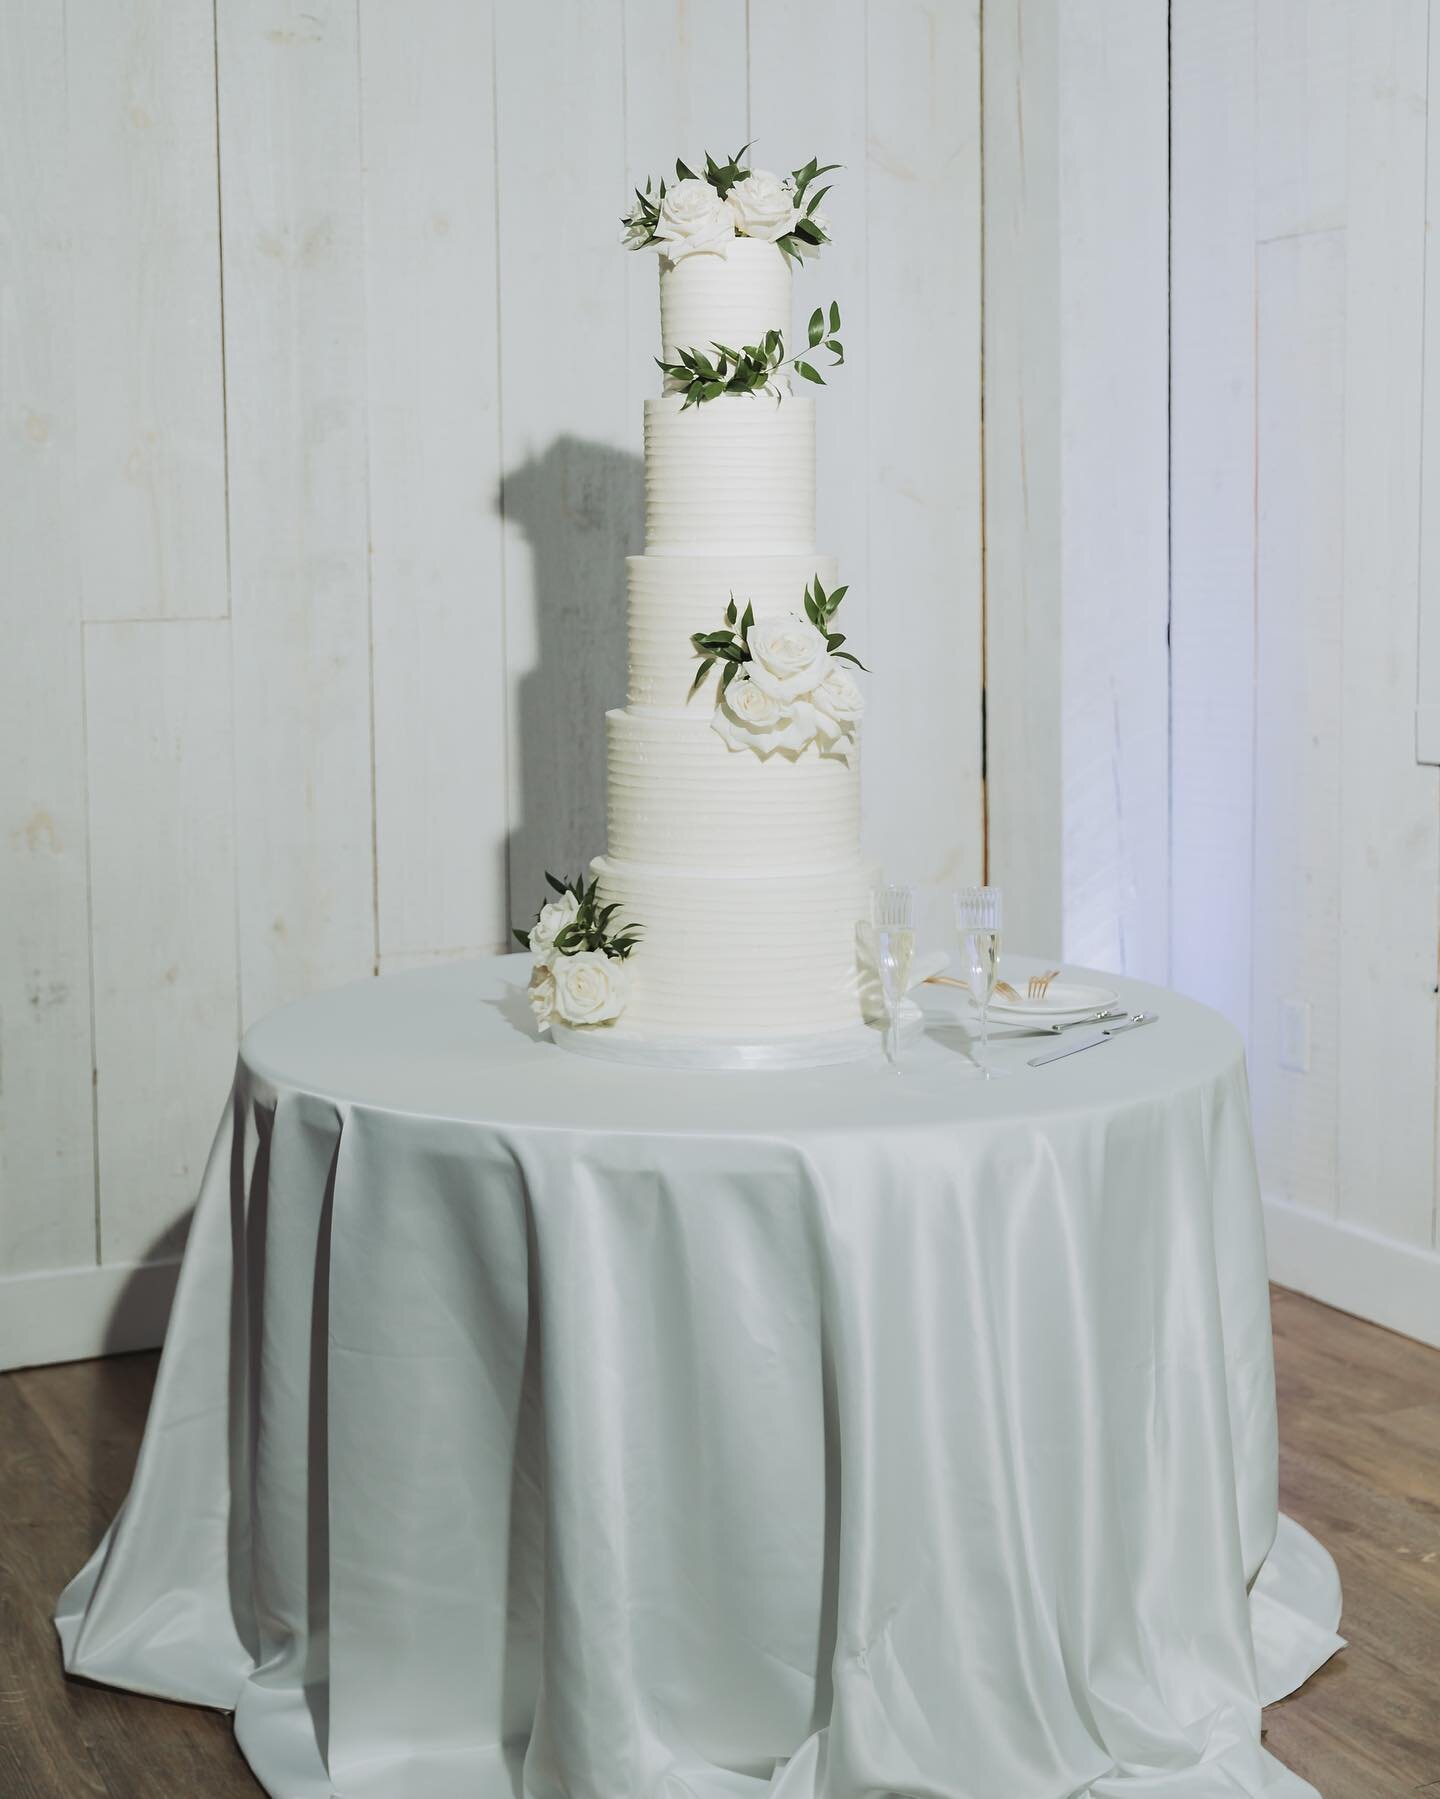 Life is always sweeter with wedding cake ! @mlopeztxrealtor 

Cake: @cakesbyginahou 
Photography: @diazphotography___ 
Florals : @evangelinedesigns 
Venue: @springsvenuewallisville 
.
.
.
.
.
#weddingcake #somethingblue #somethingbarrowed #weddingtra